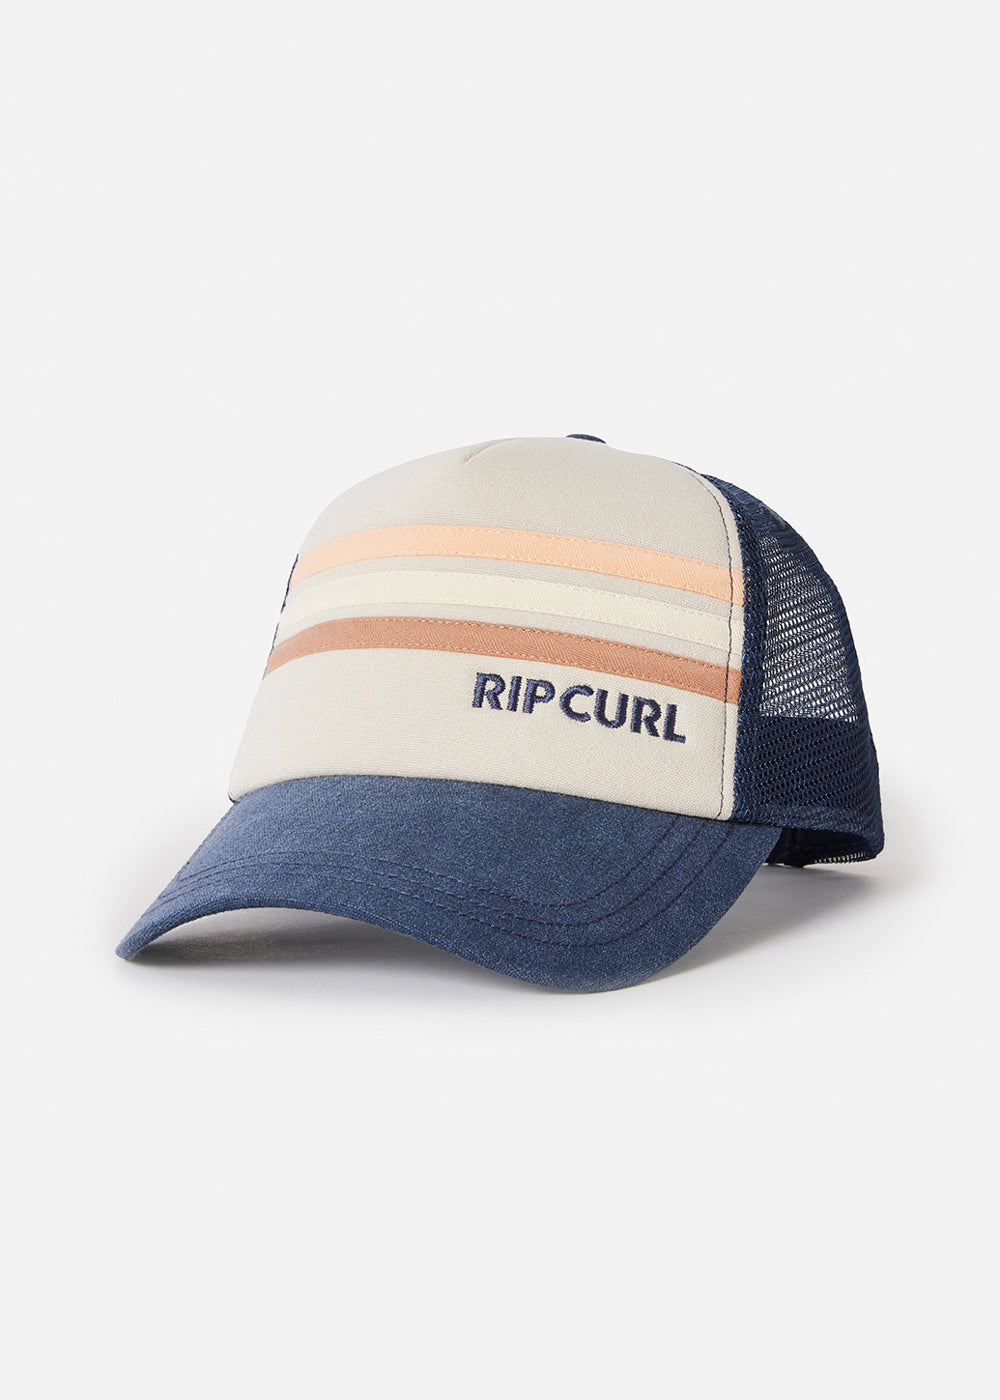 Mixed Revival Trucker Cap by Rip Curl